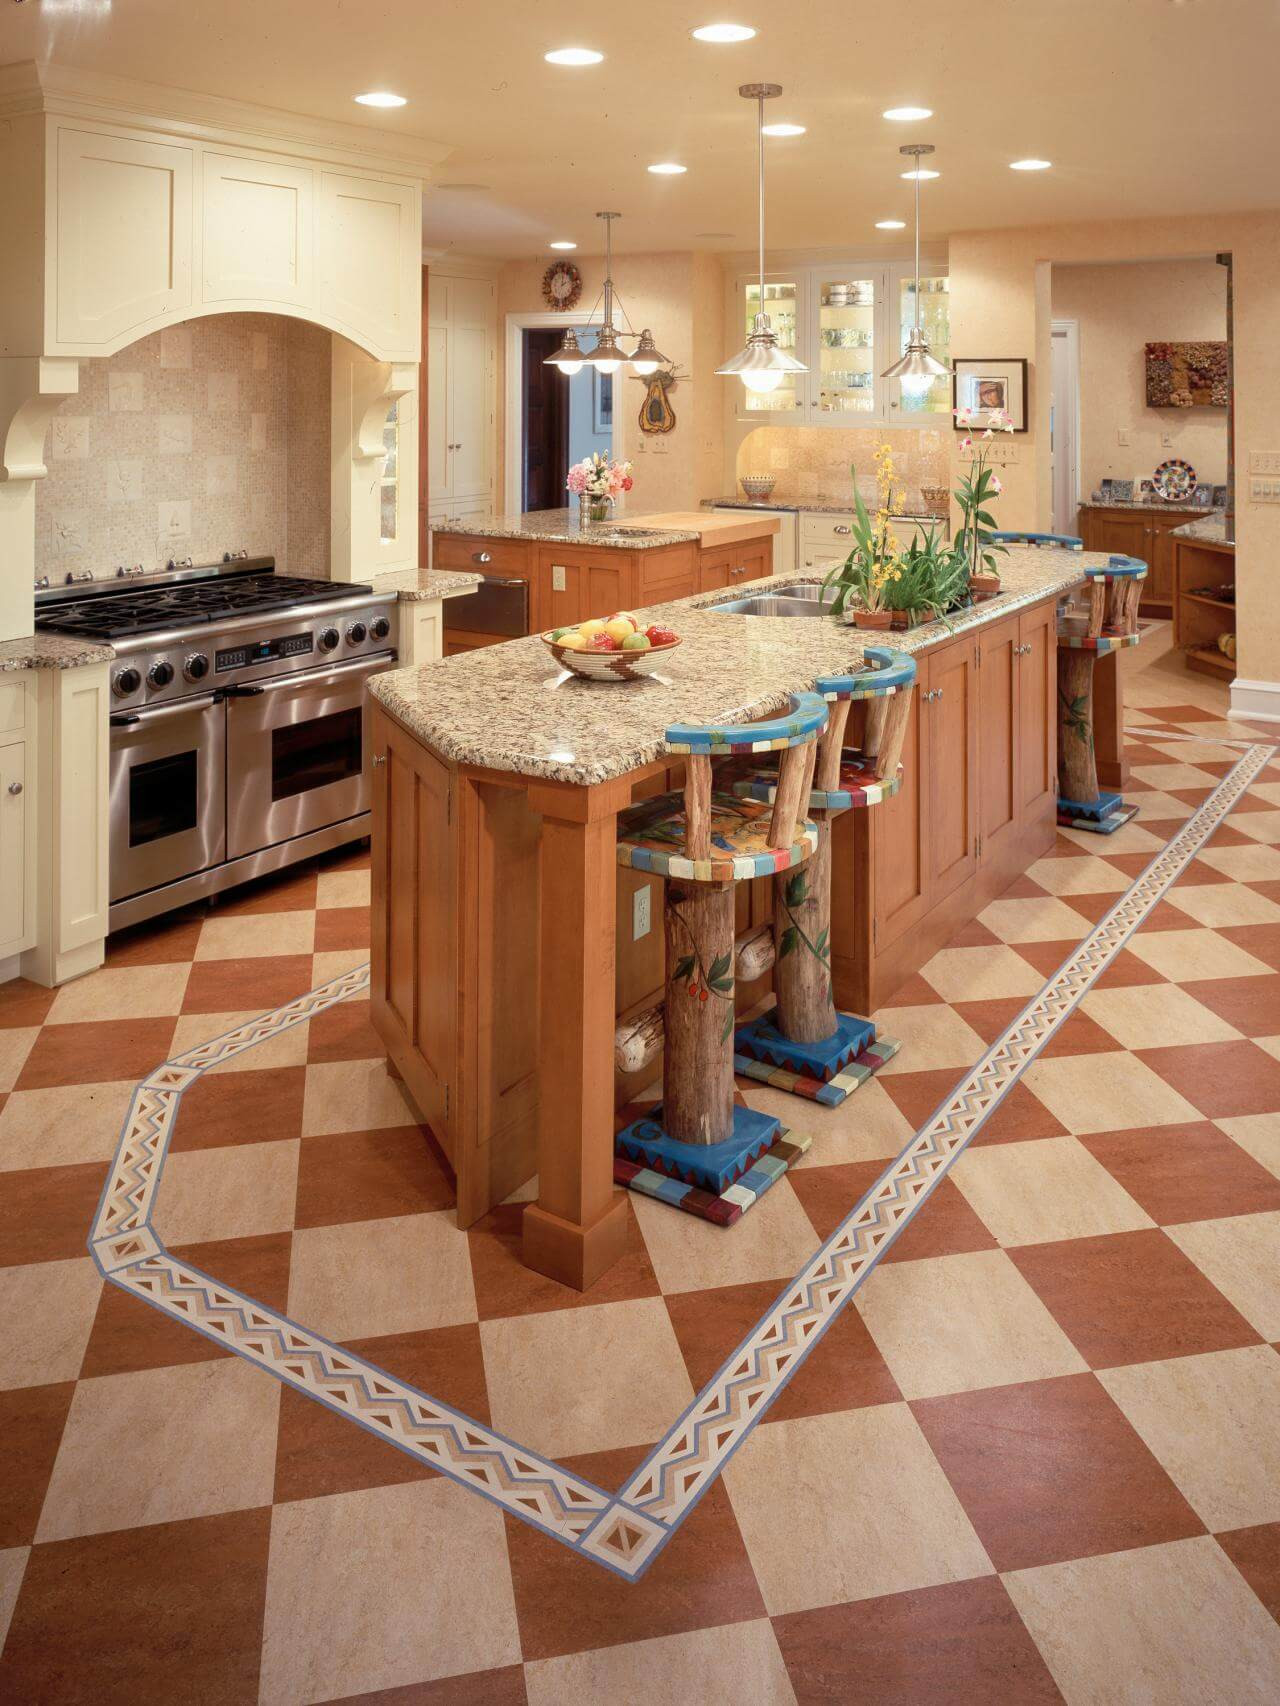 Best Tile For Kitchen Flooring
 20 Best Kitchen Tile Floor Ideas for Your Home